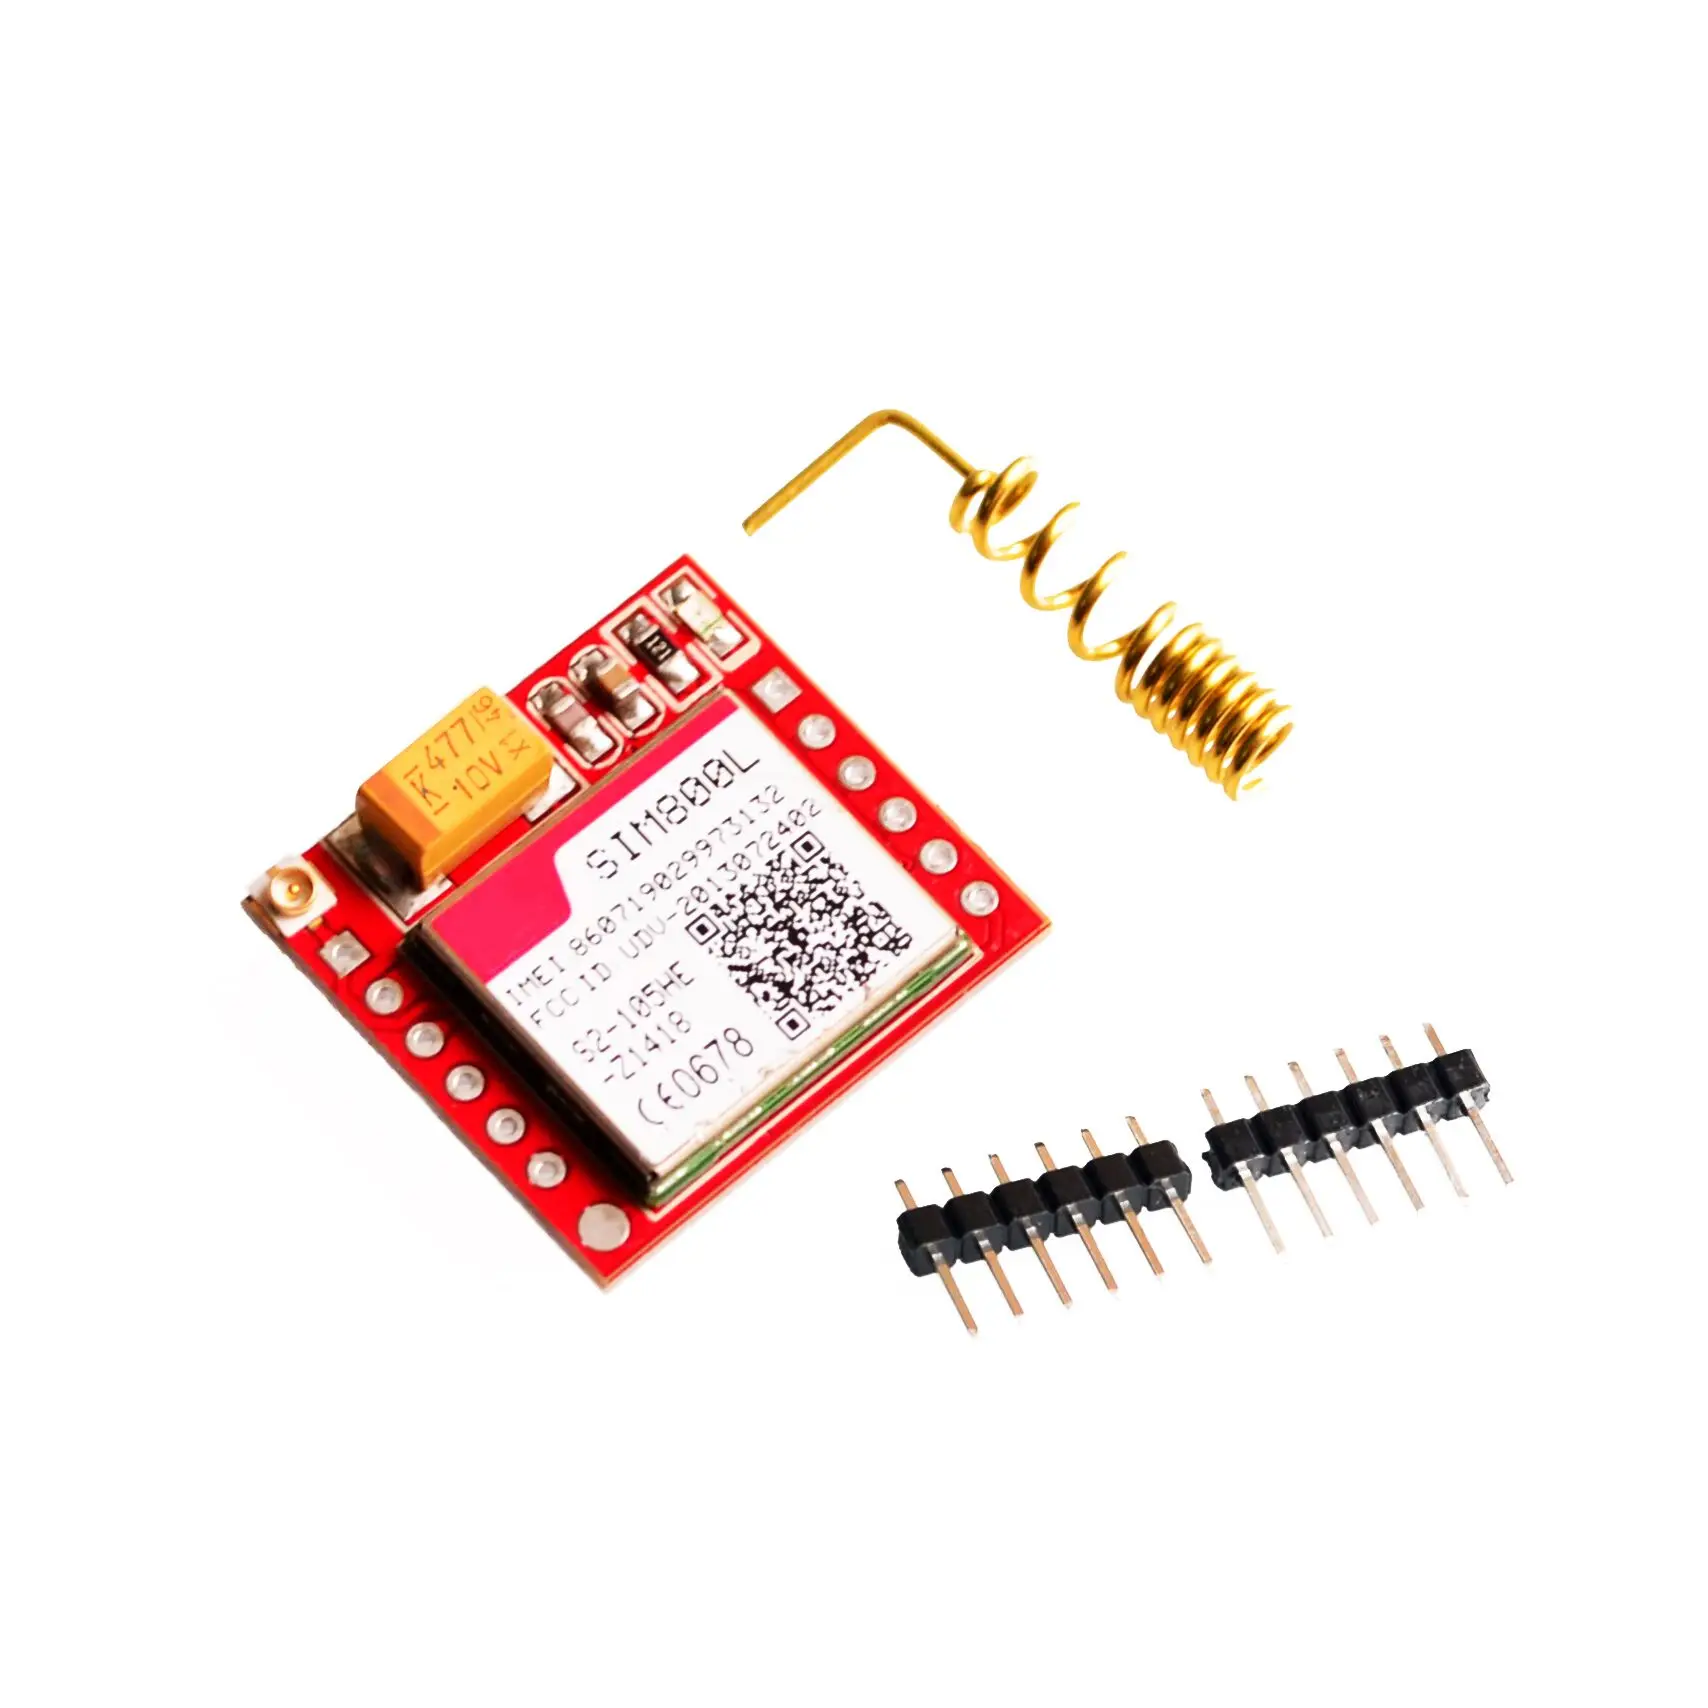 

Mini Smallest SIM800L GPRS GSM Module MicroSIM Card Core Wireless Board Quad-band TTL Serial Port With Antenna for Arduino